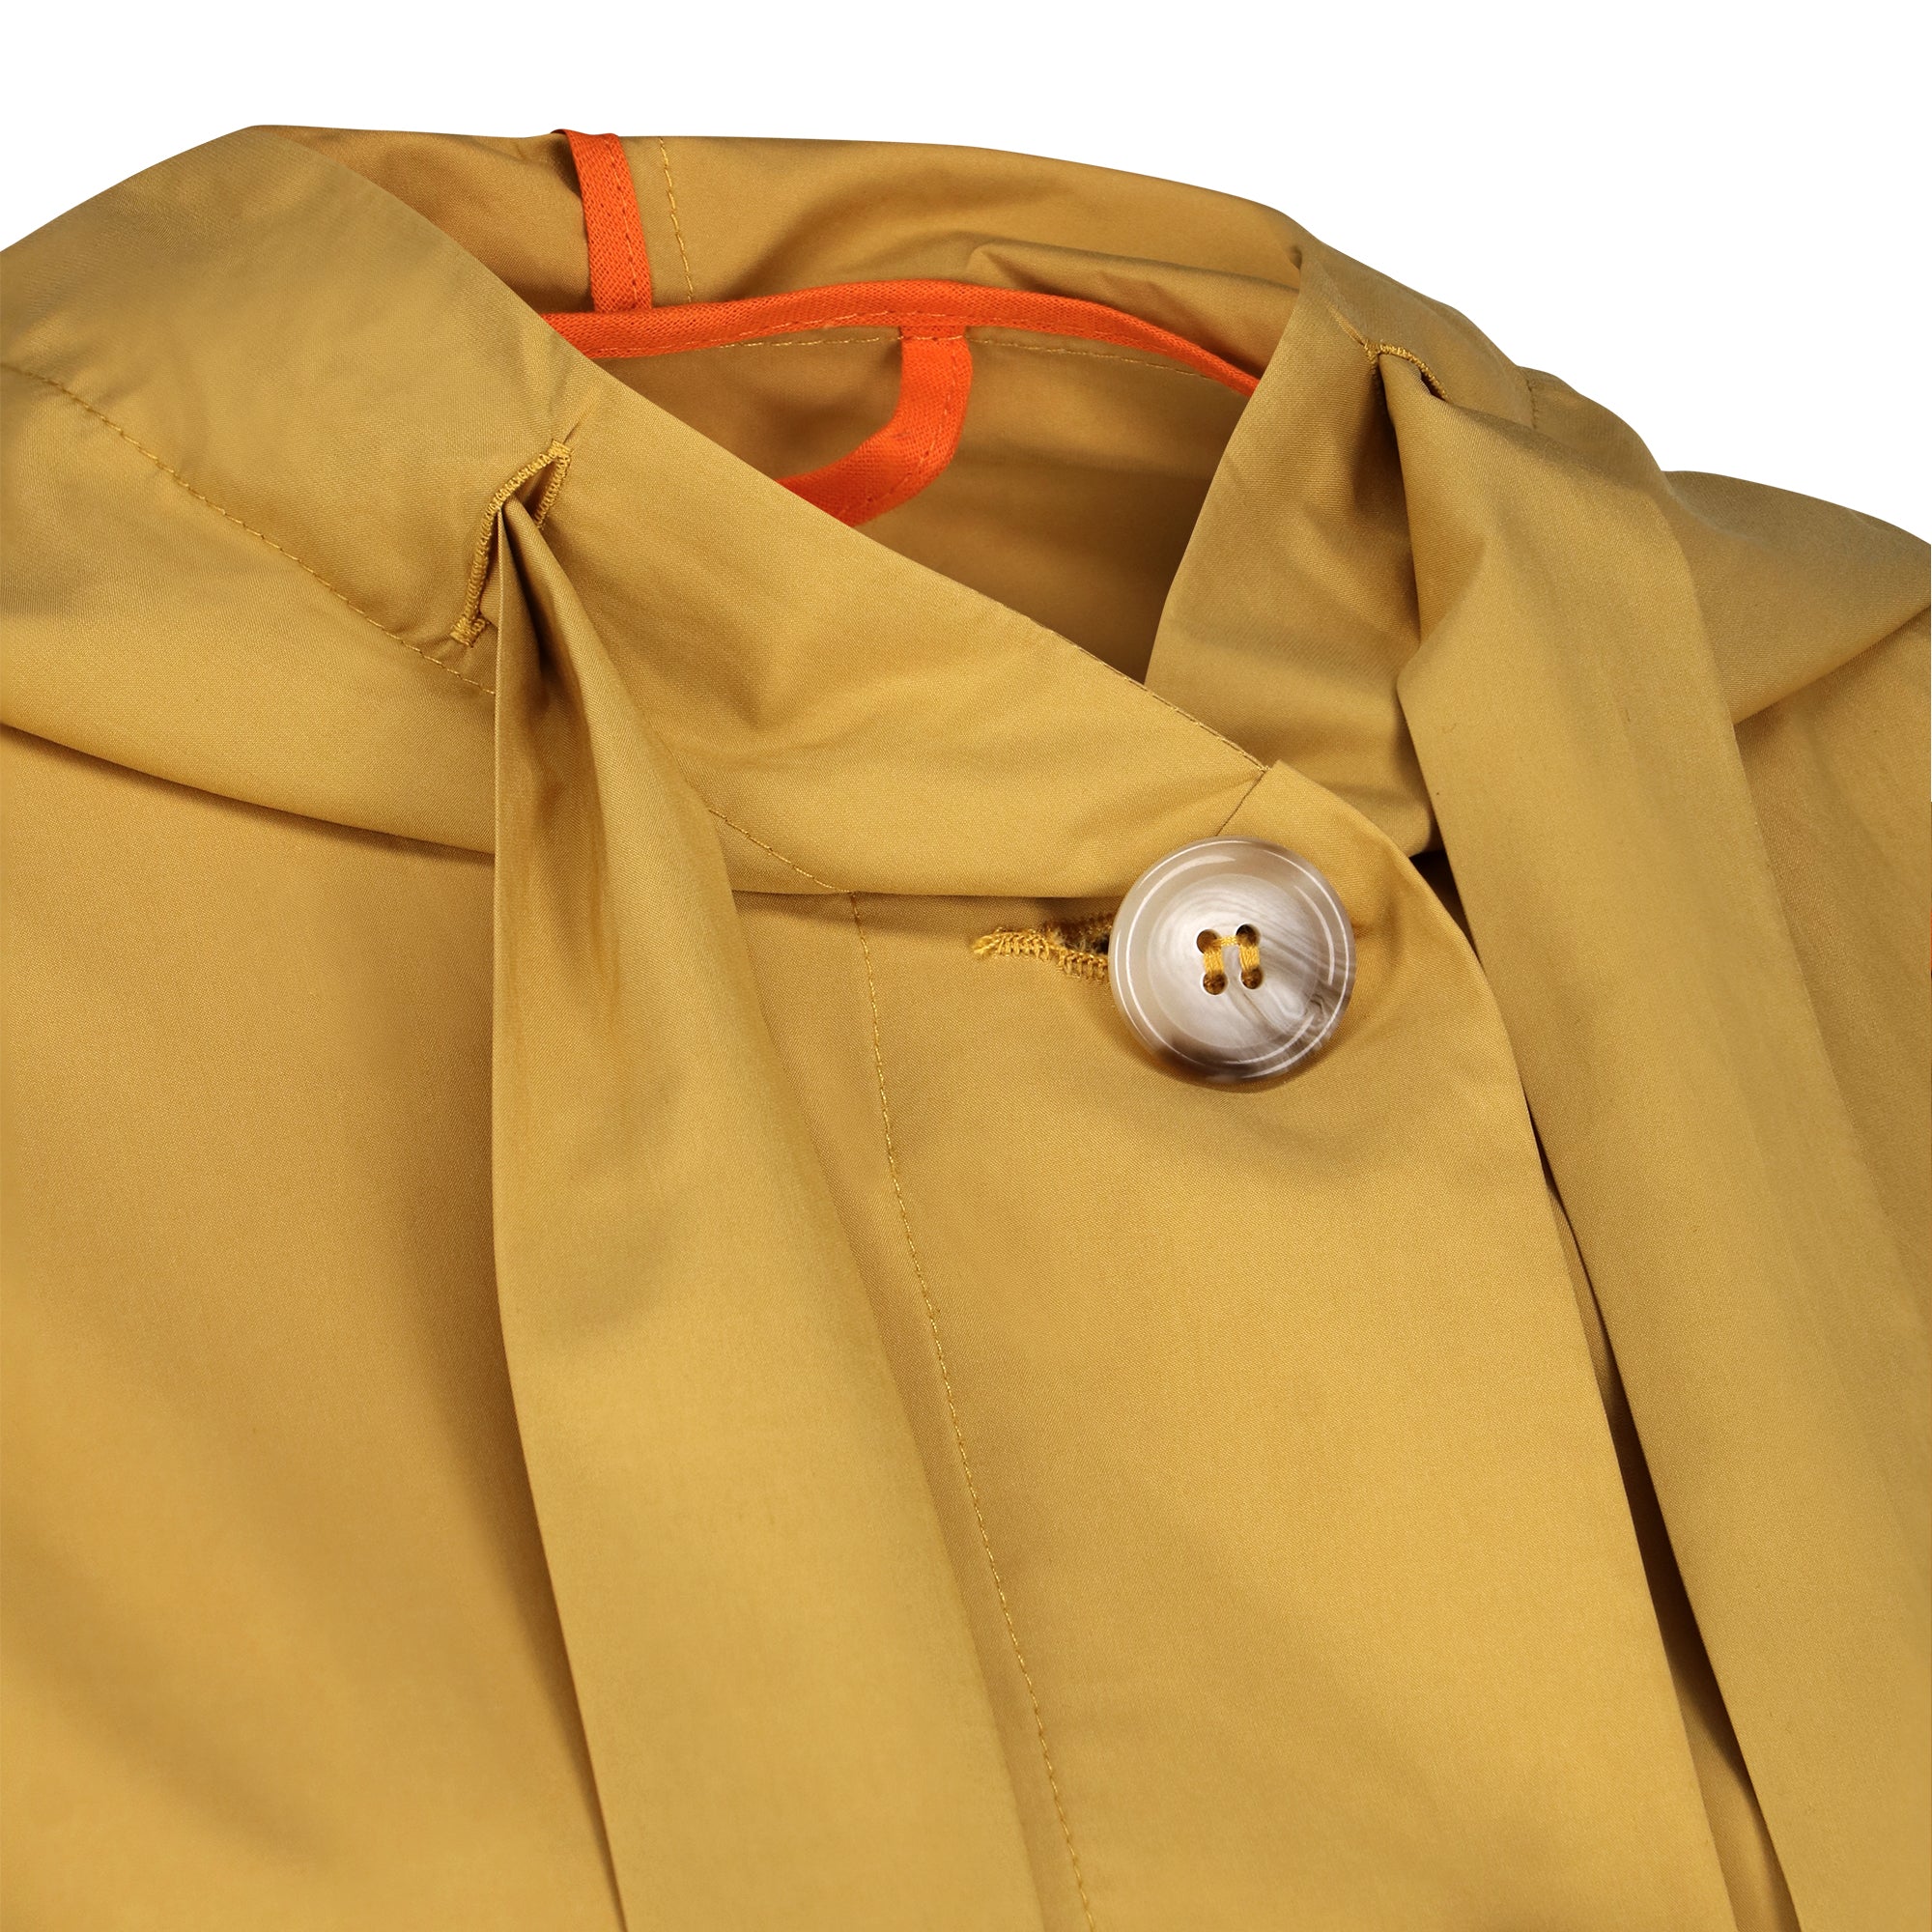 The classic raincoat - curry color - neckline detail